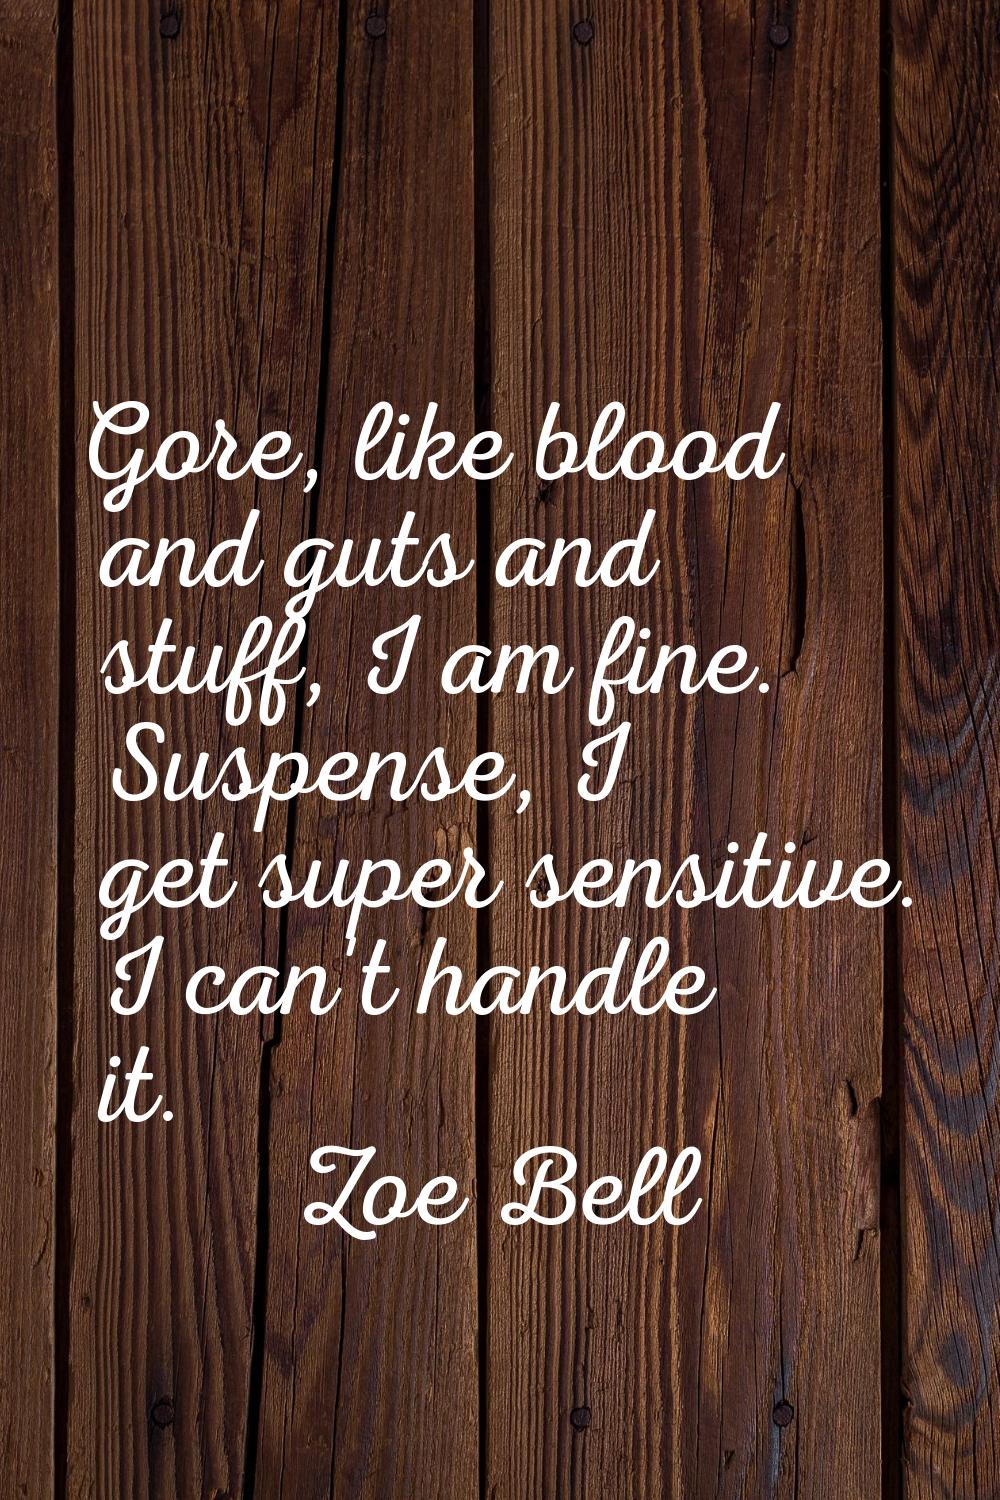 Gore, like blood and guts and stuff, I am fine. Suspense, I get super sensitive. I can't handle it.